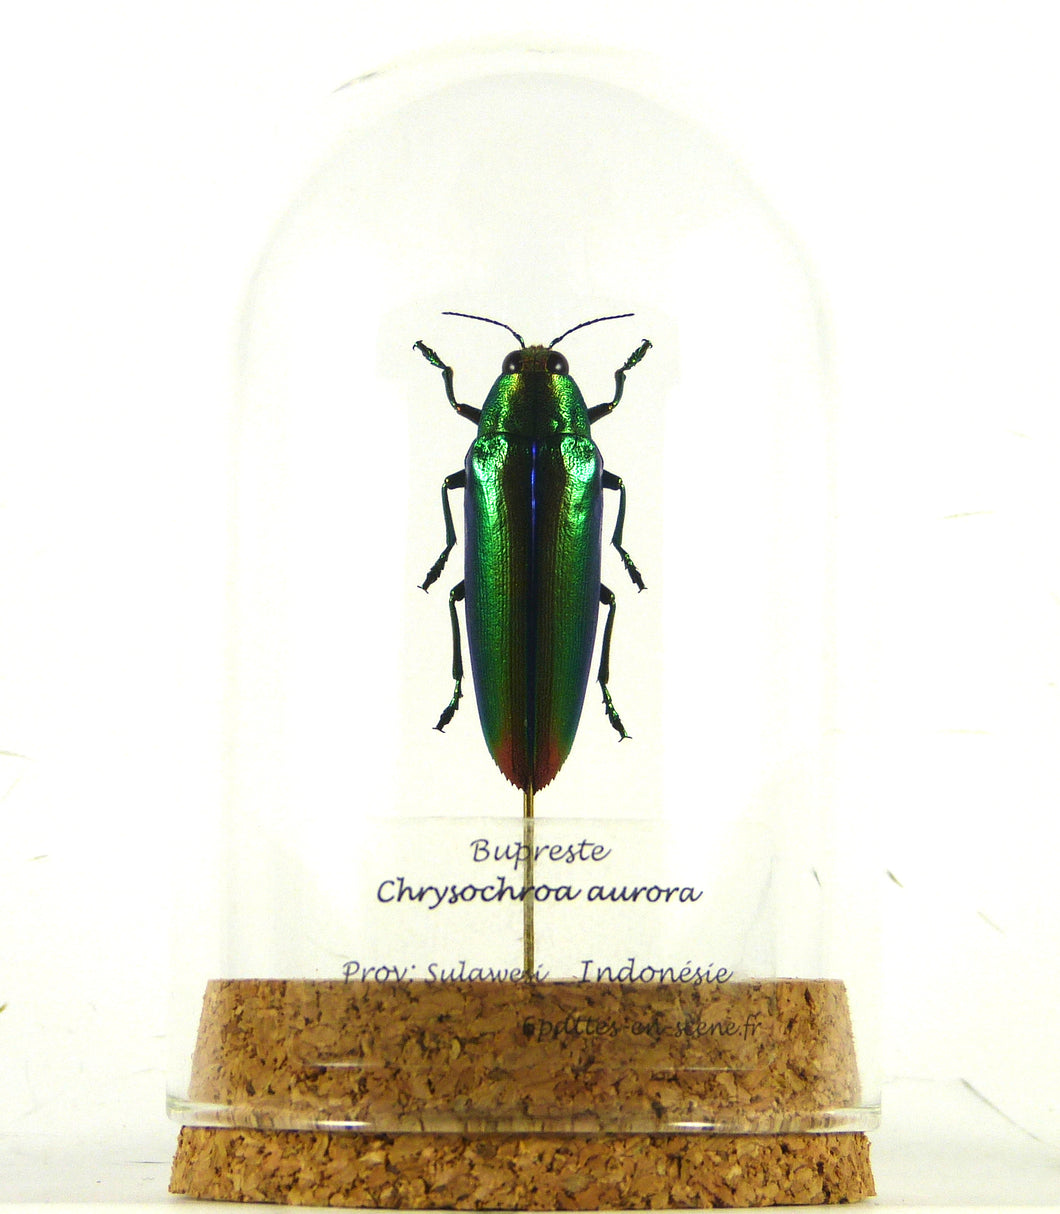 Coléoptère bupreste Chrysochroa aurora - sous globe, cloche